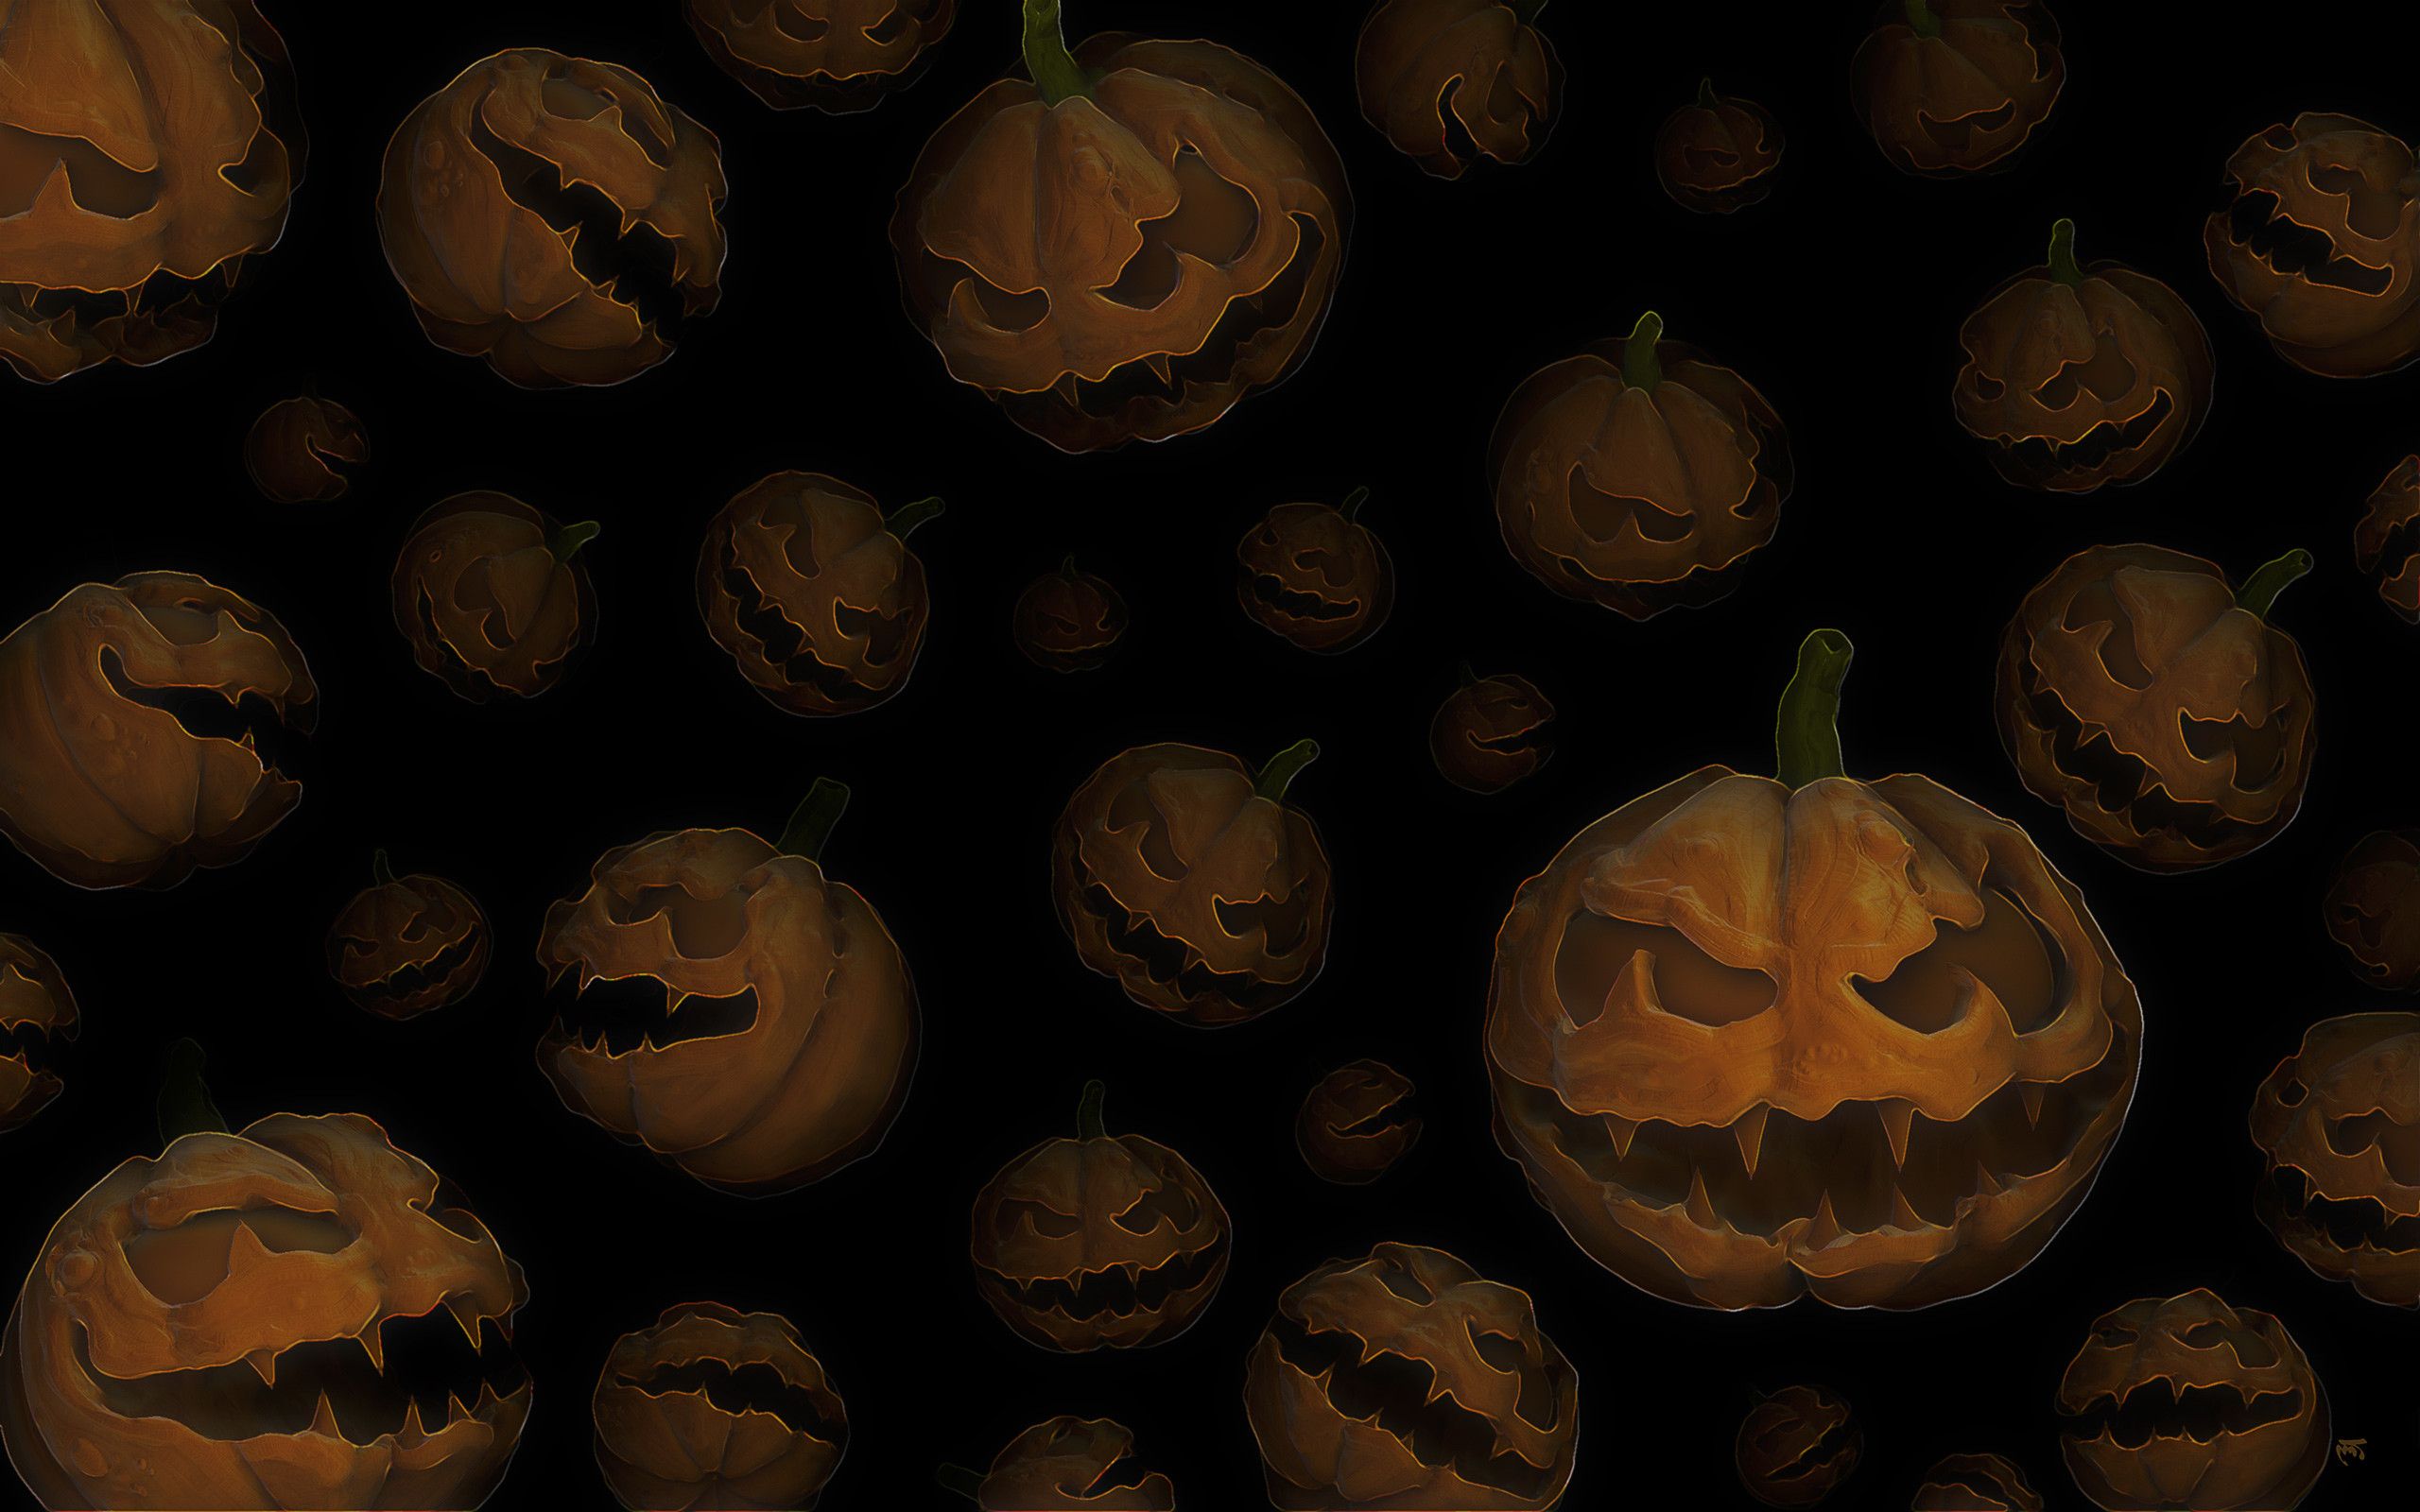 A group of pumpkins on the dark background - Halloween desktop